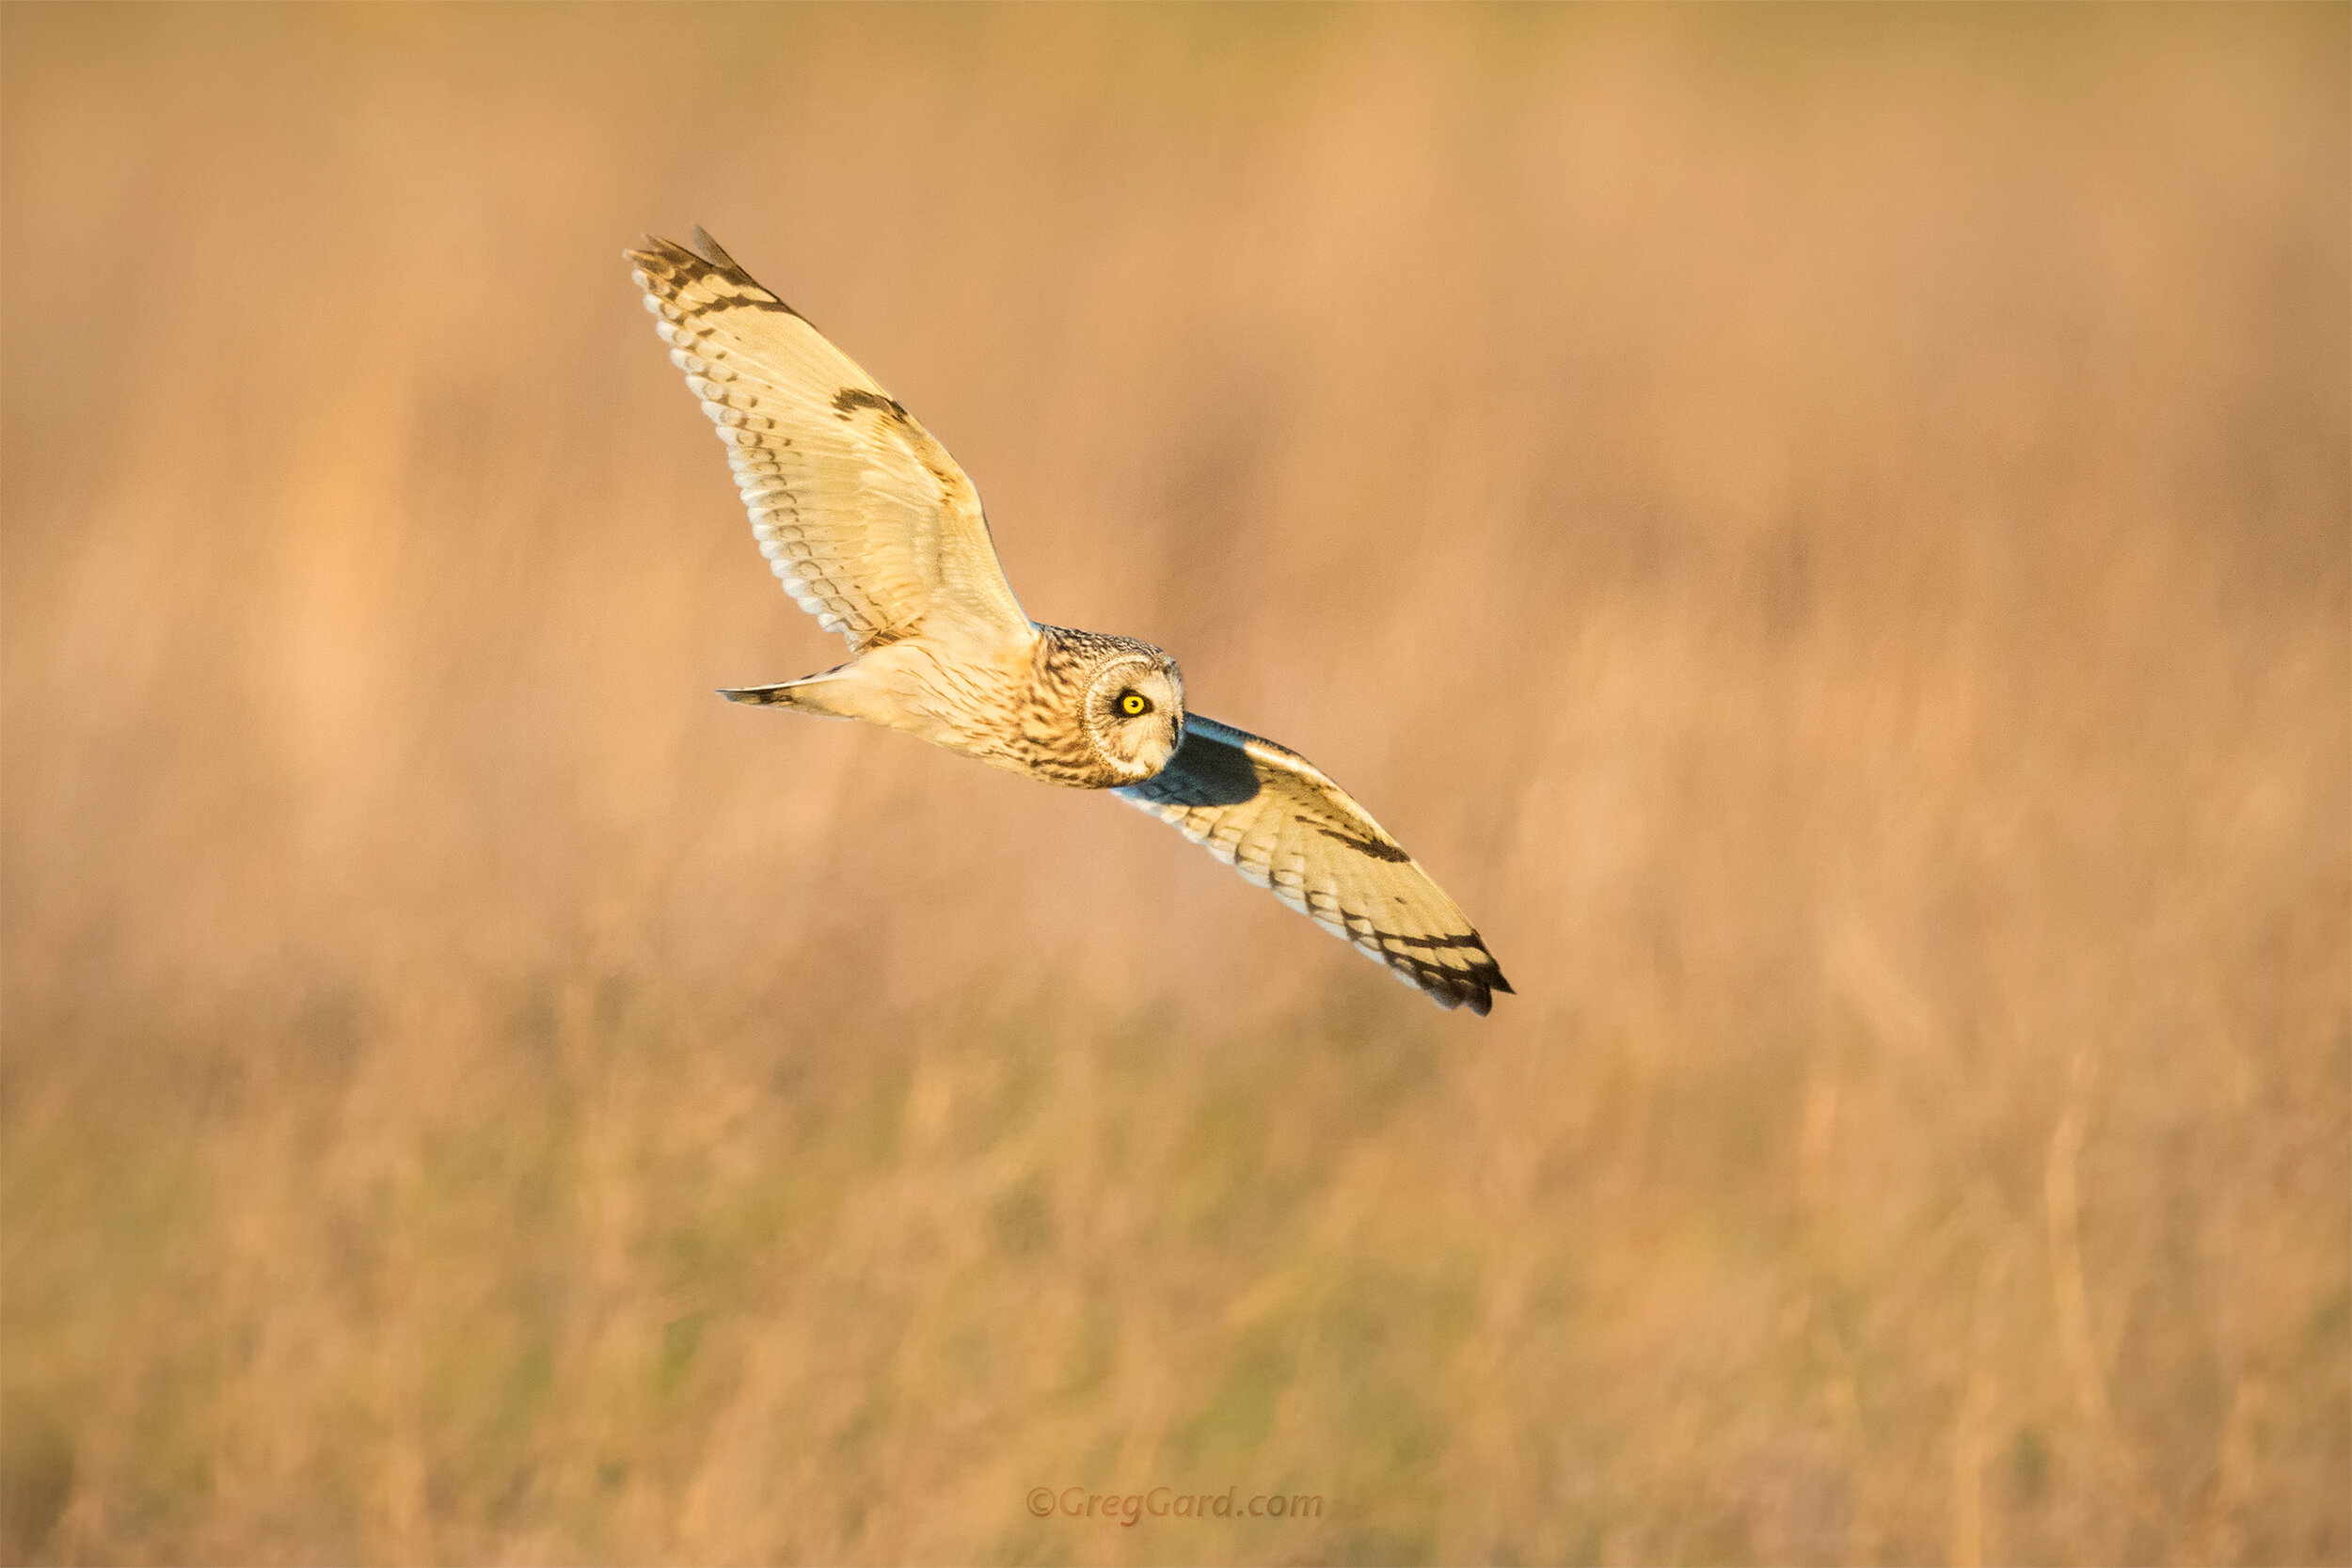 short-eared-owl-flying-ny-bird-photography-greg-gard-7220.jpg